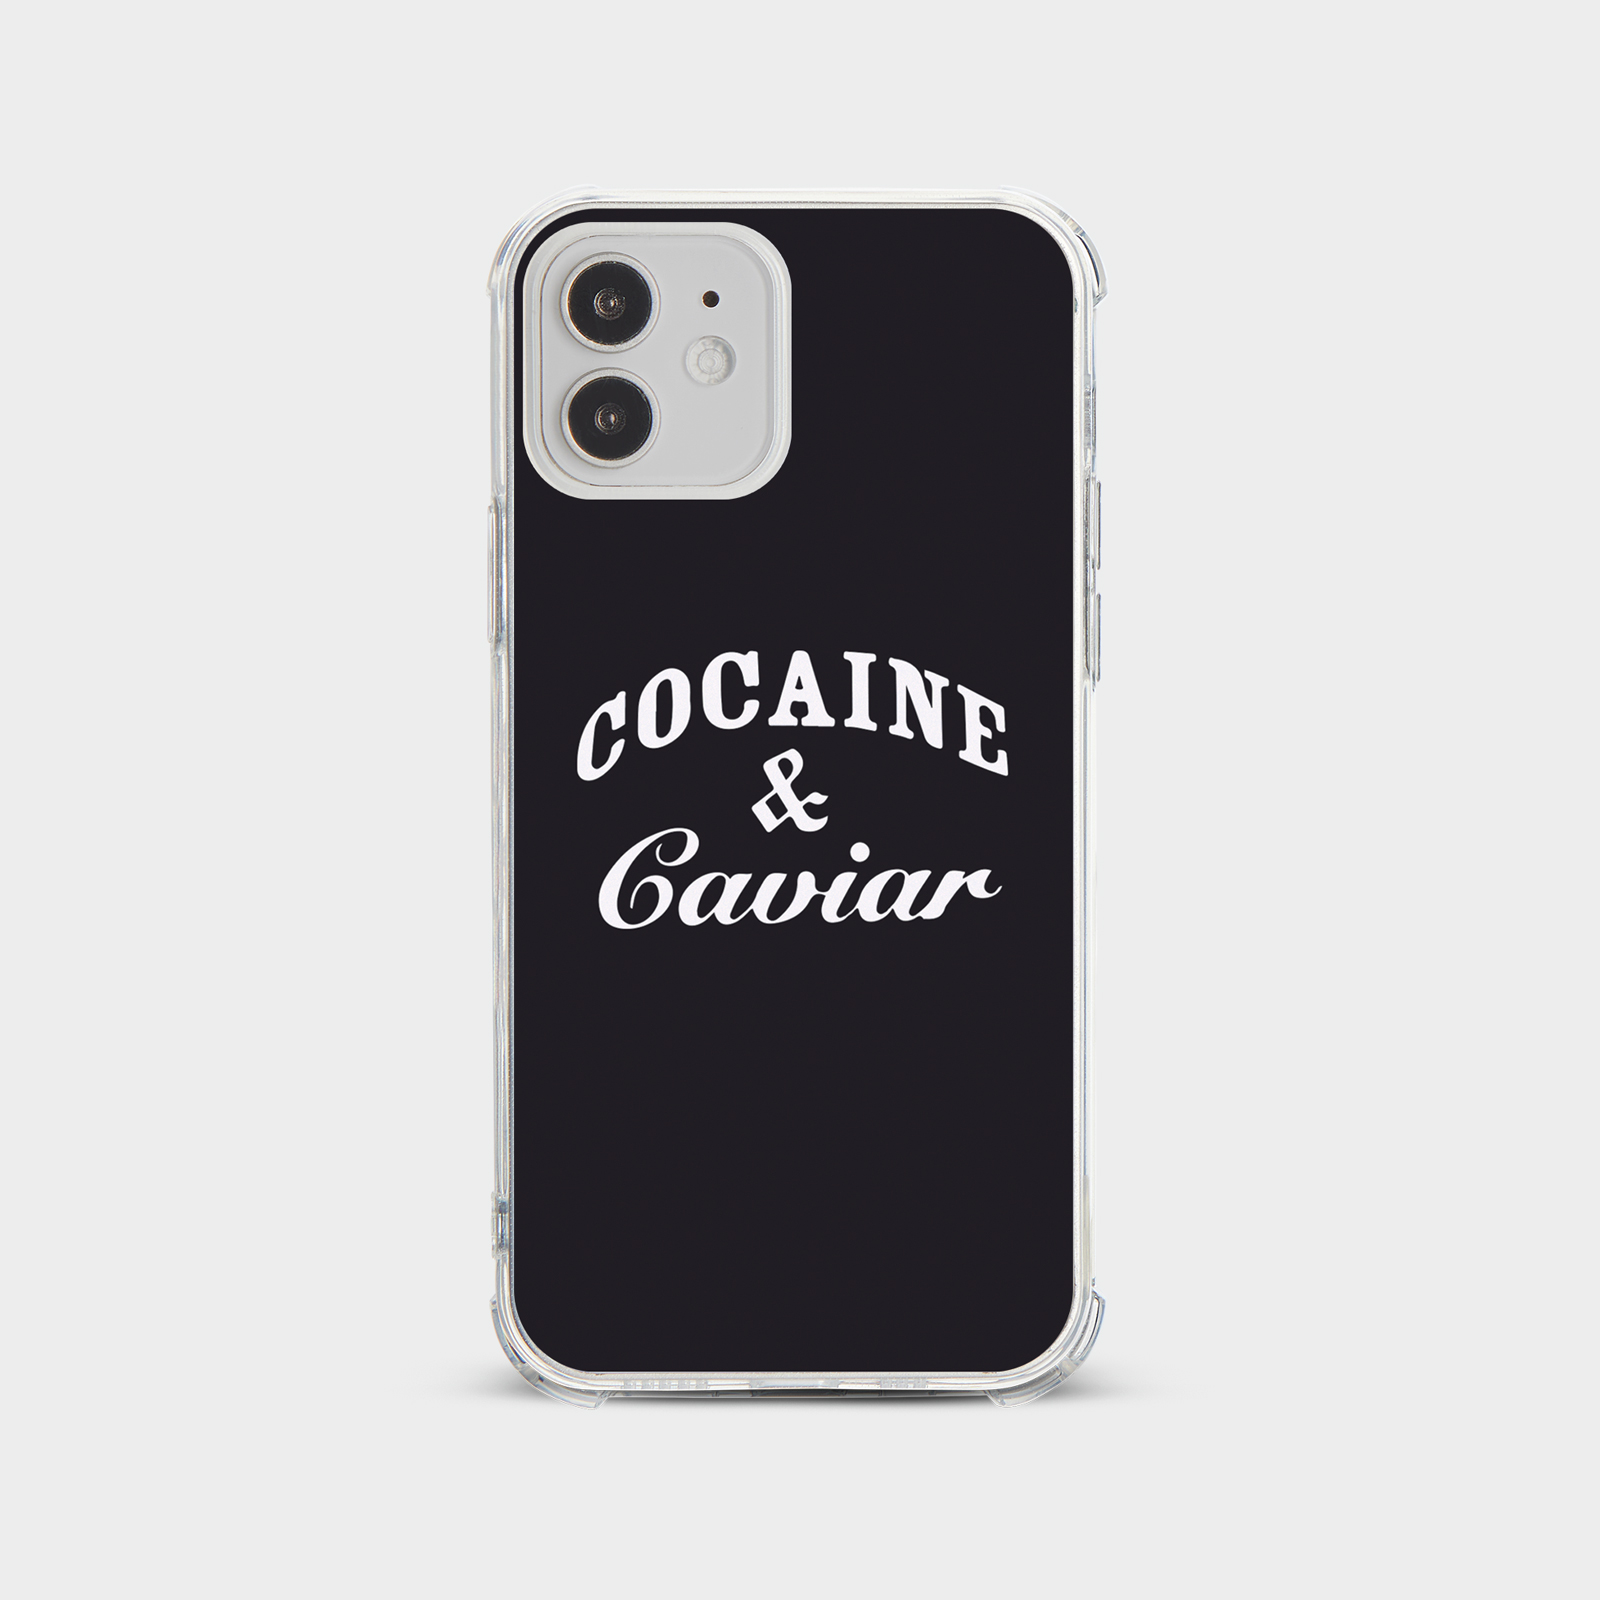 IPHONE CASES – Cookiecase™